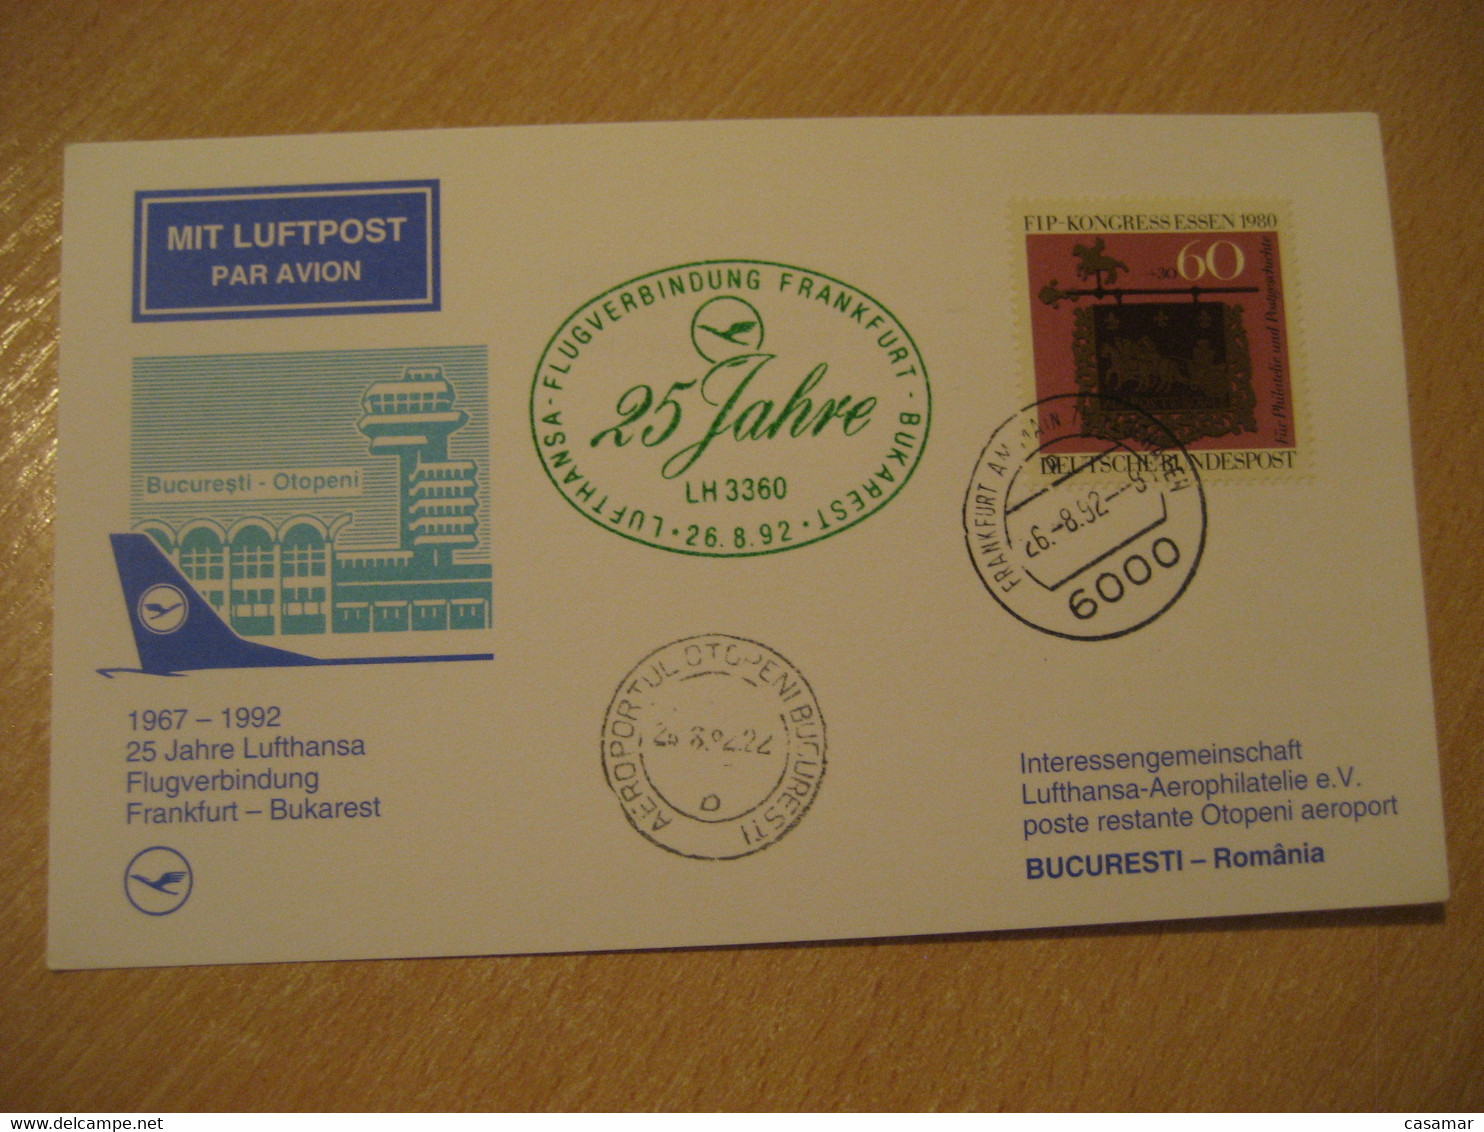 BUCHAREST Frankfurt 1992 Lufthansa Airlines Airline 25 Year First Flight Green Cancel Card ROMANIA GERMANY - Briefe U. Dokumente